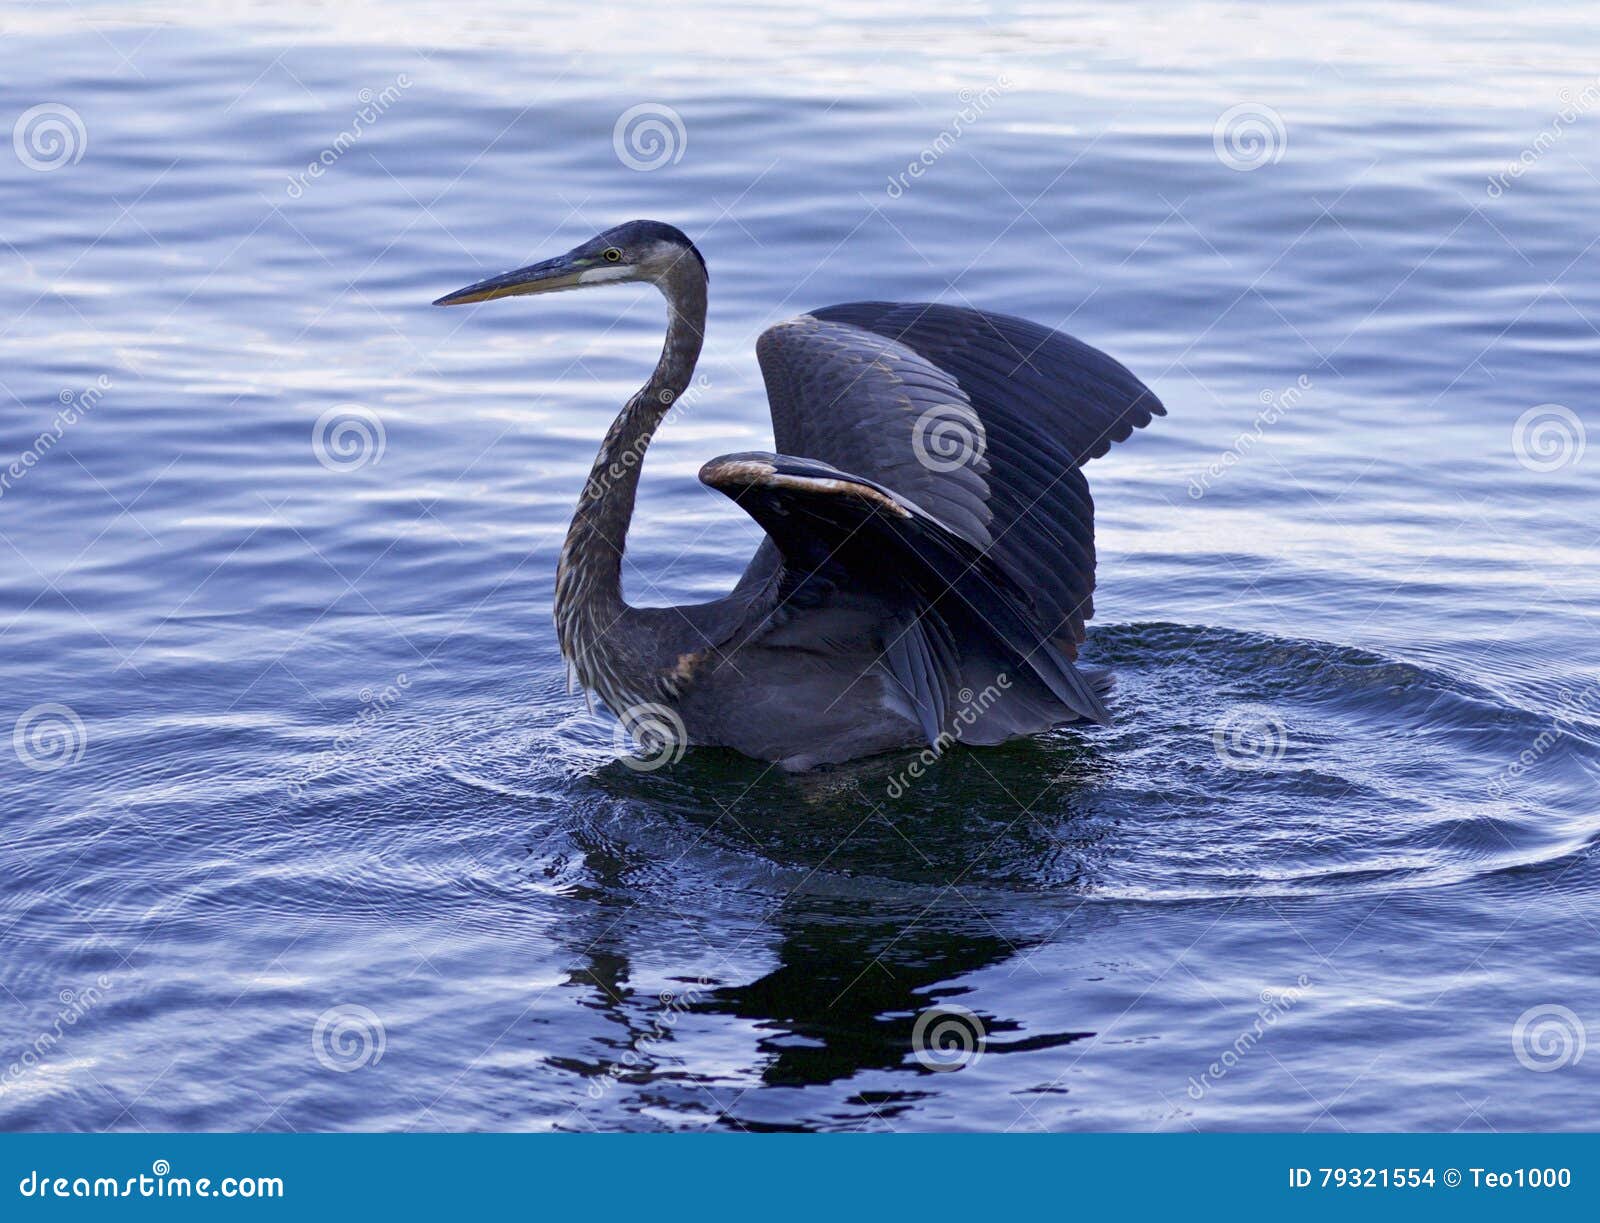 Great Blue Heron Swimming